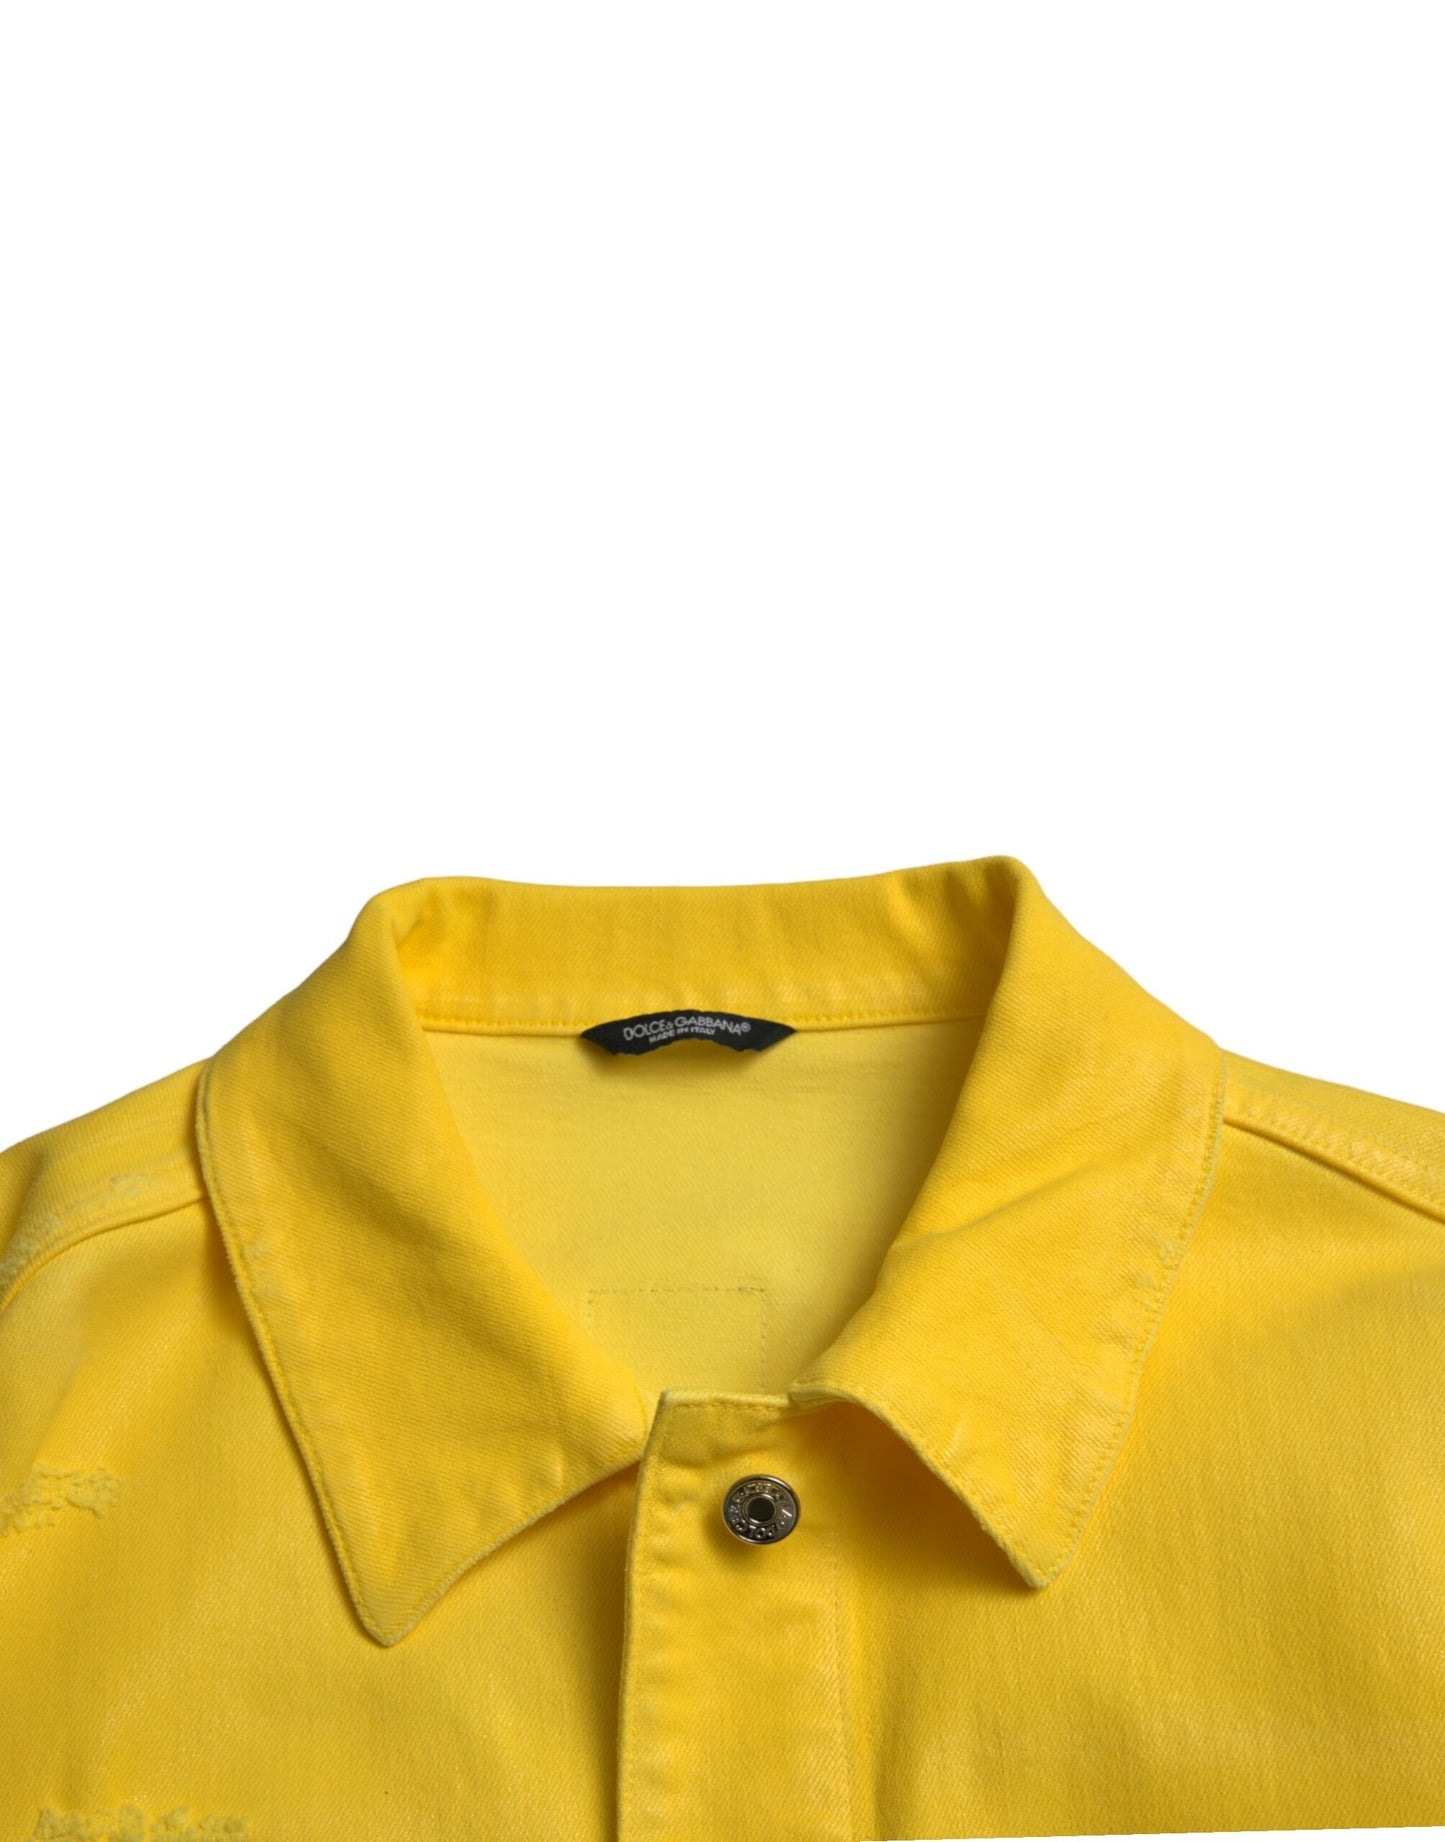 Yellow Cotton DENIM Jeans Coat Jacket